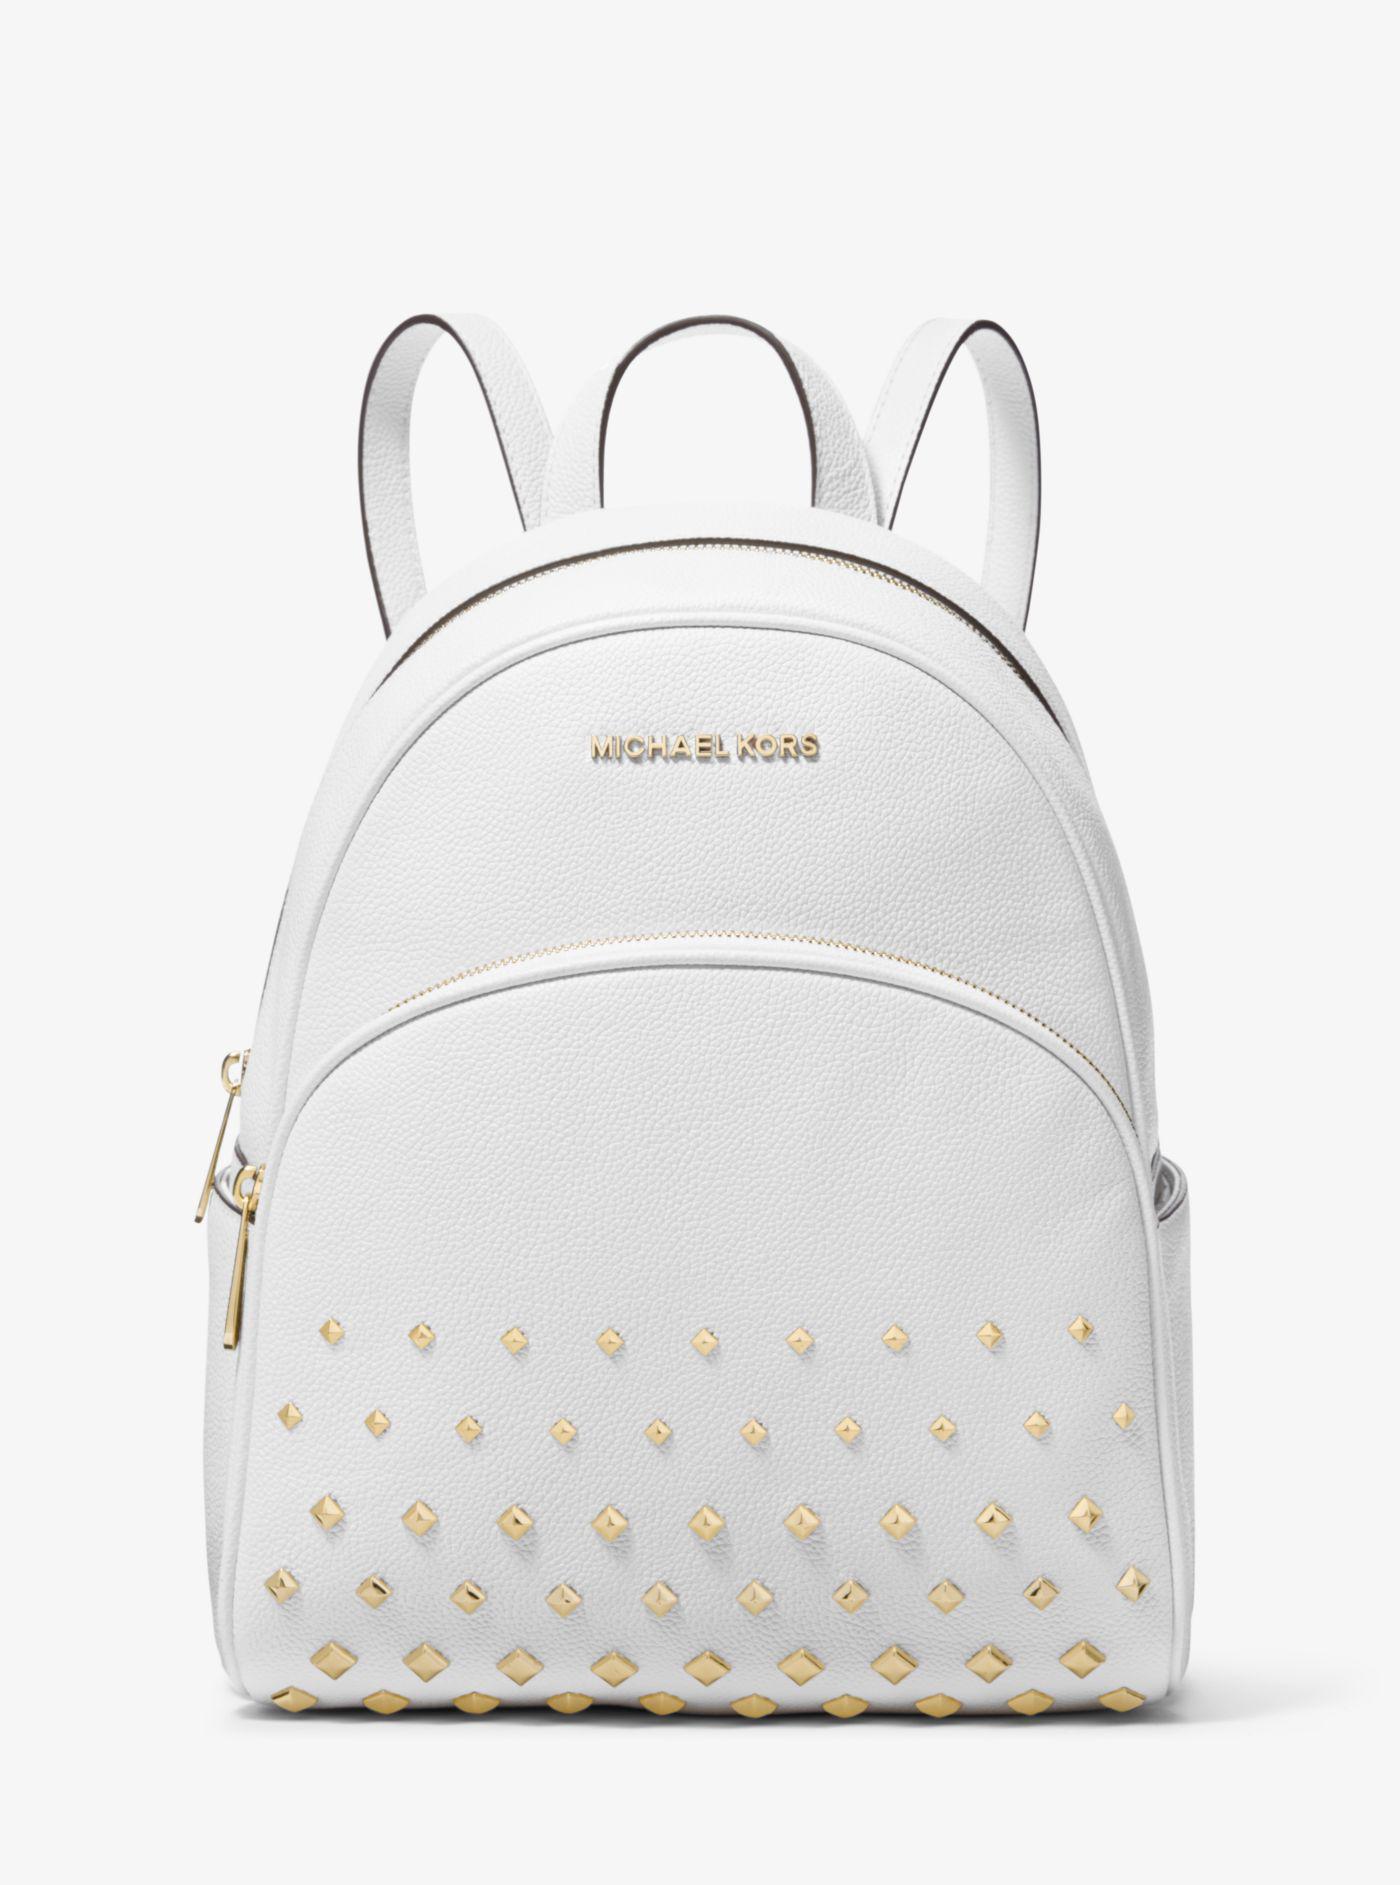 Michael Kors Abbey Medium Studded Backpack Leather White Bag | Lyst